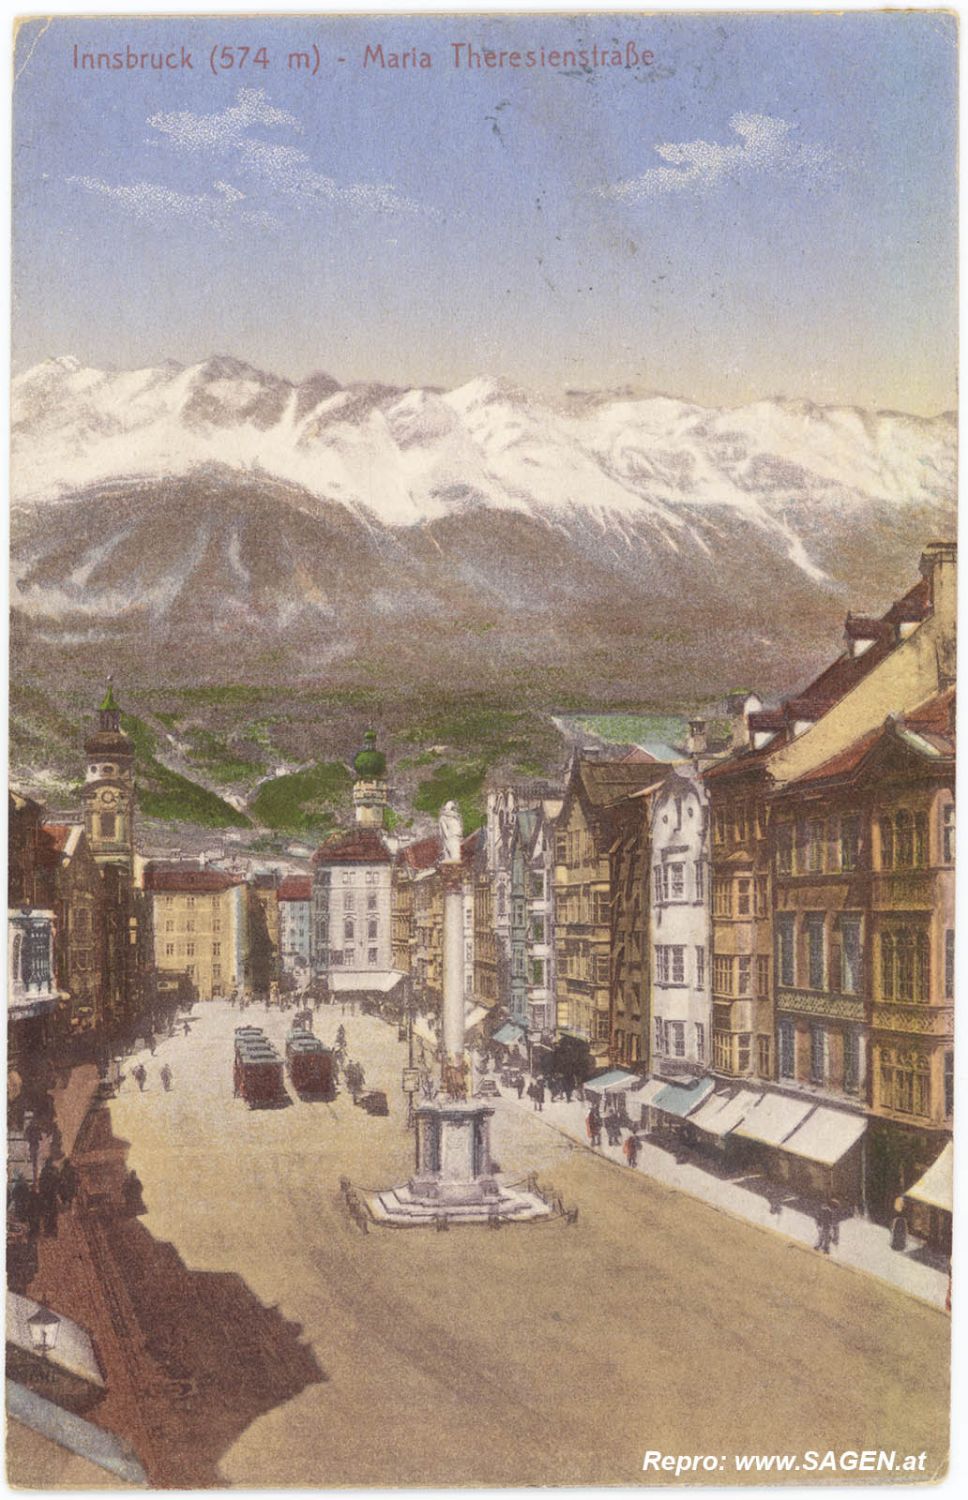 Innsbruck (574m) - Maria Theresienstraße